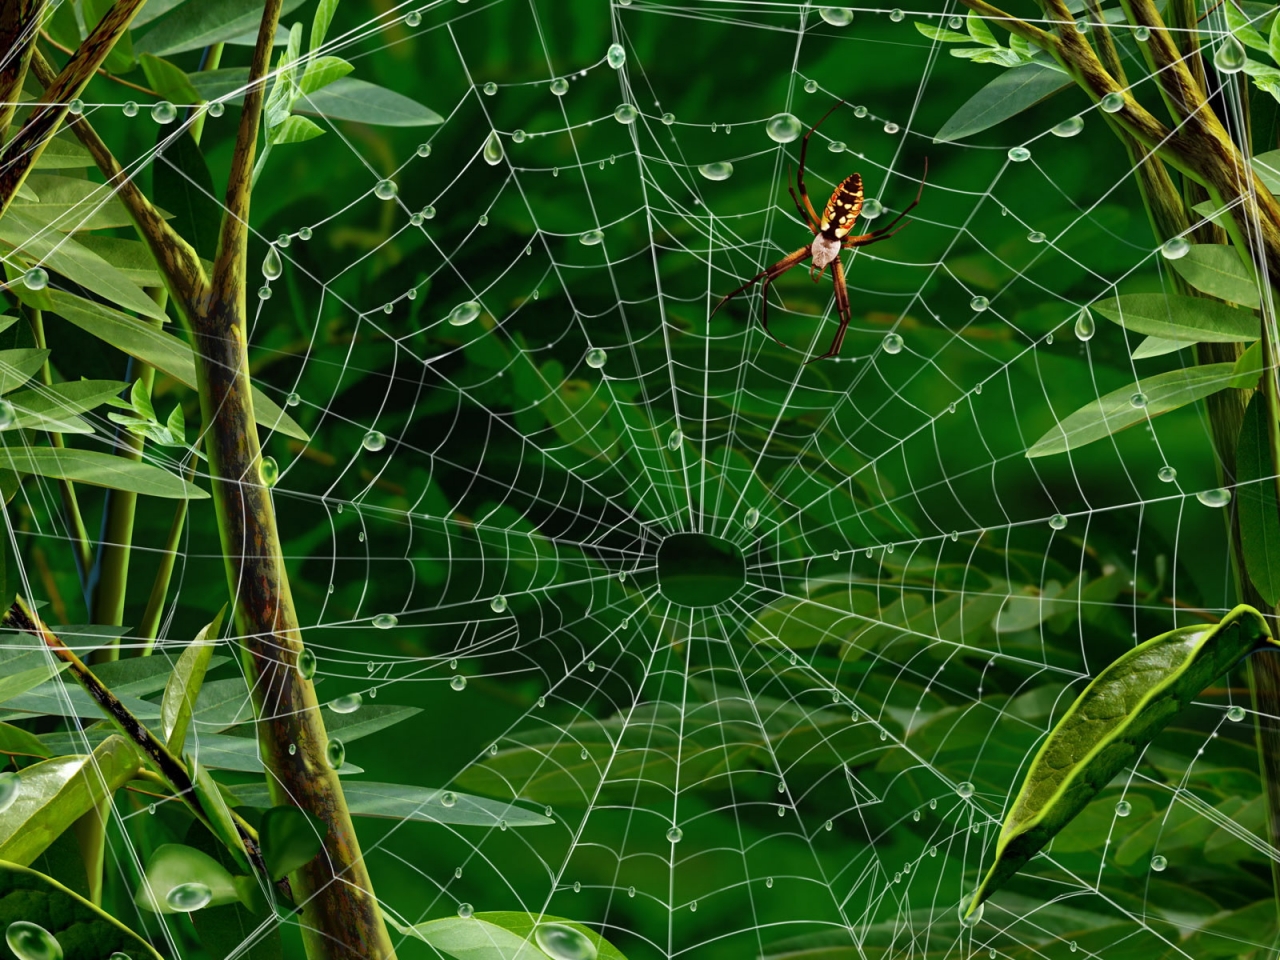 Spider walking for 1280 x 960 resolution